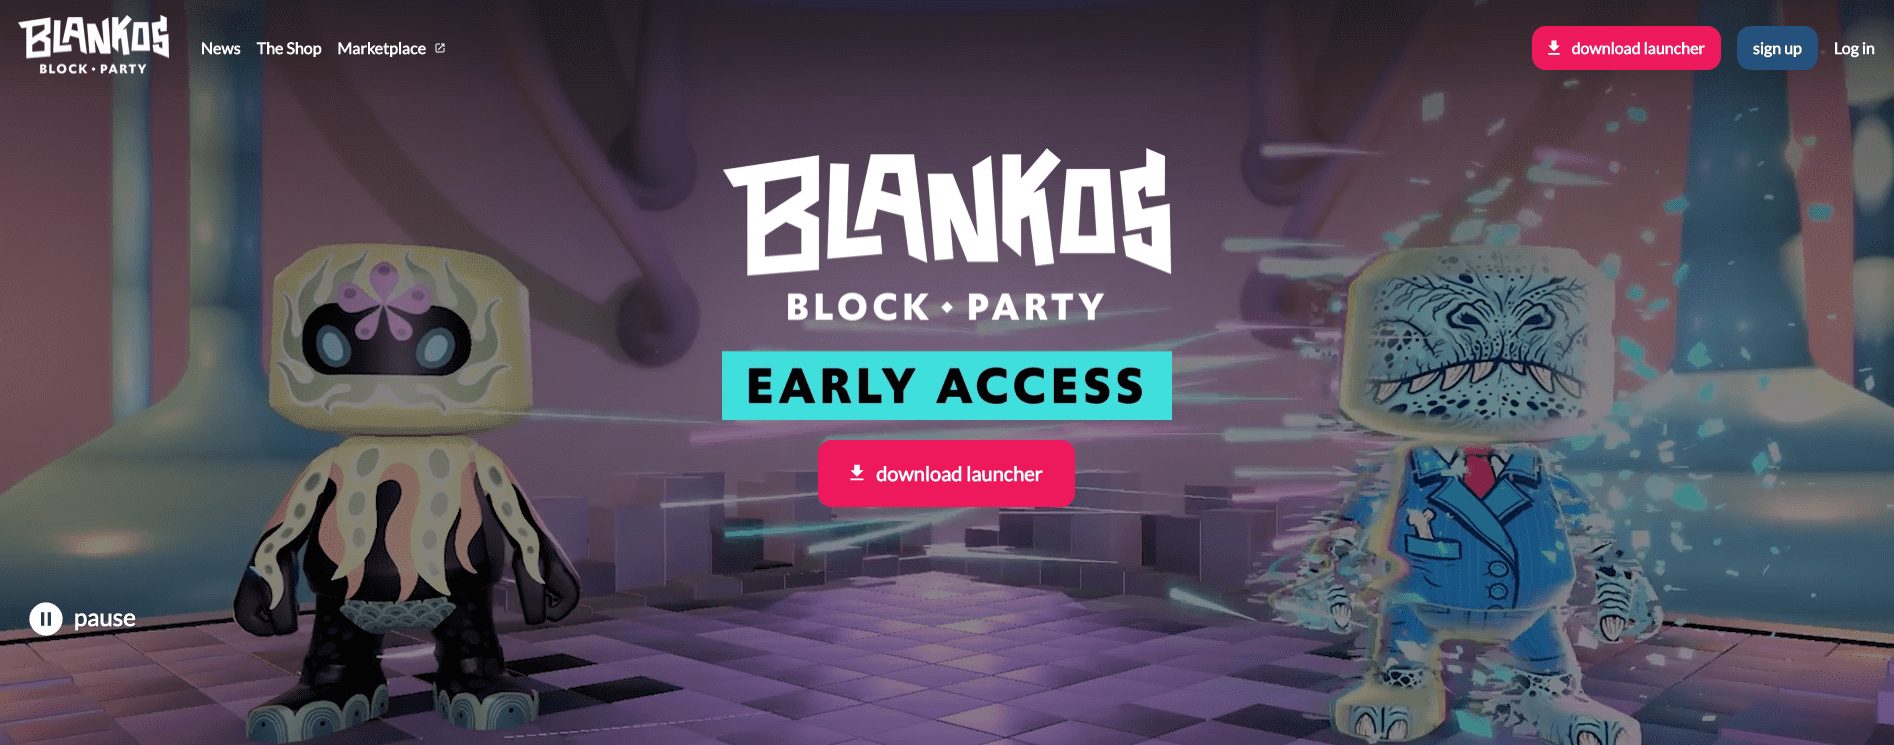 BLANKOS BLOCK PARTY(ブランコス)とは